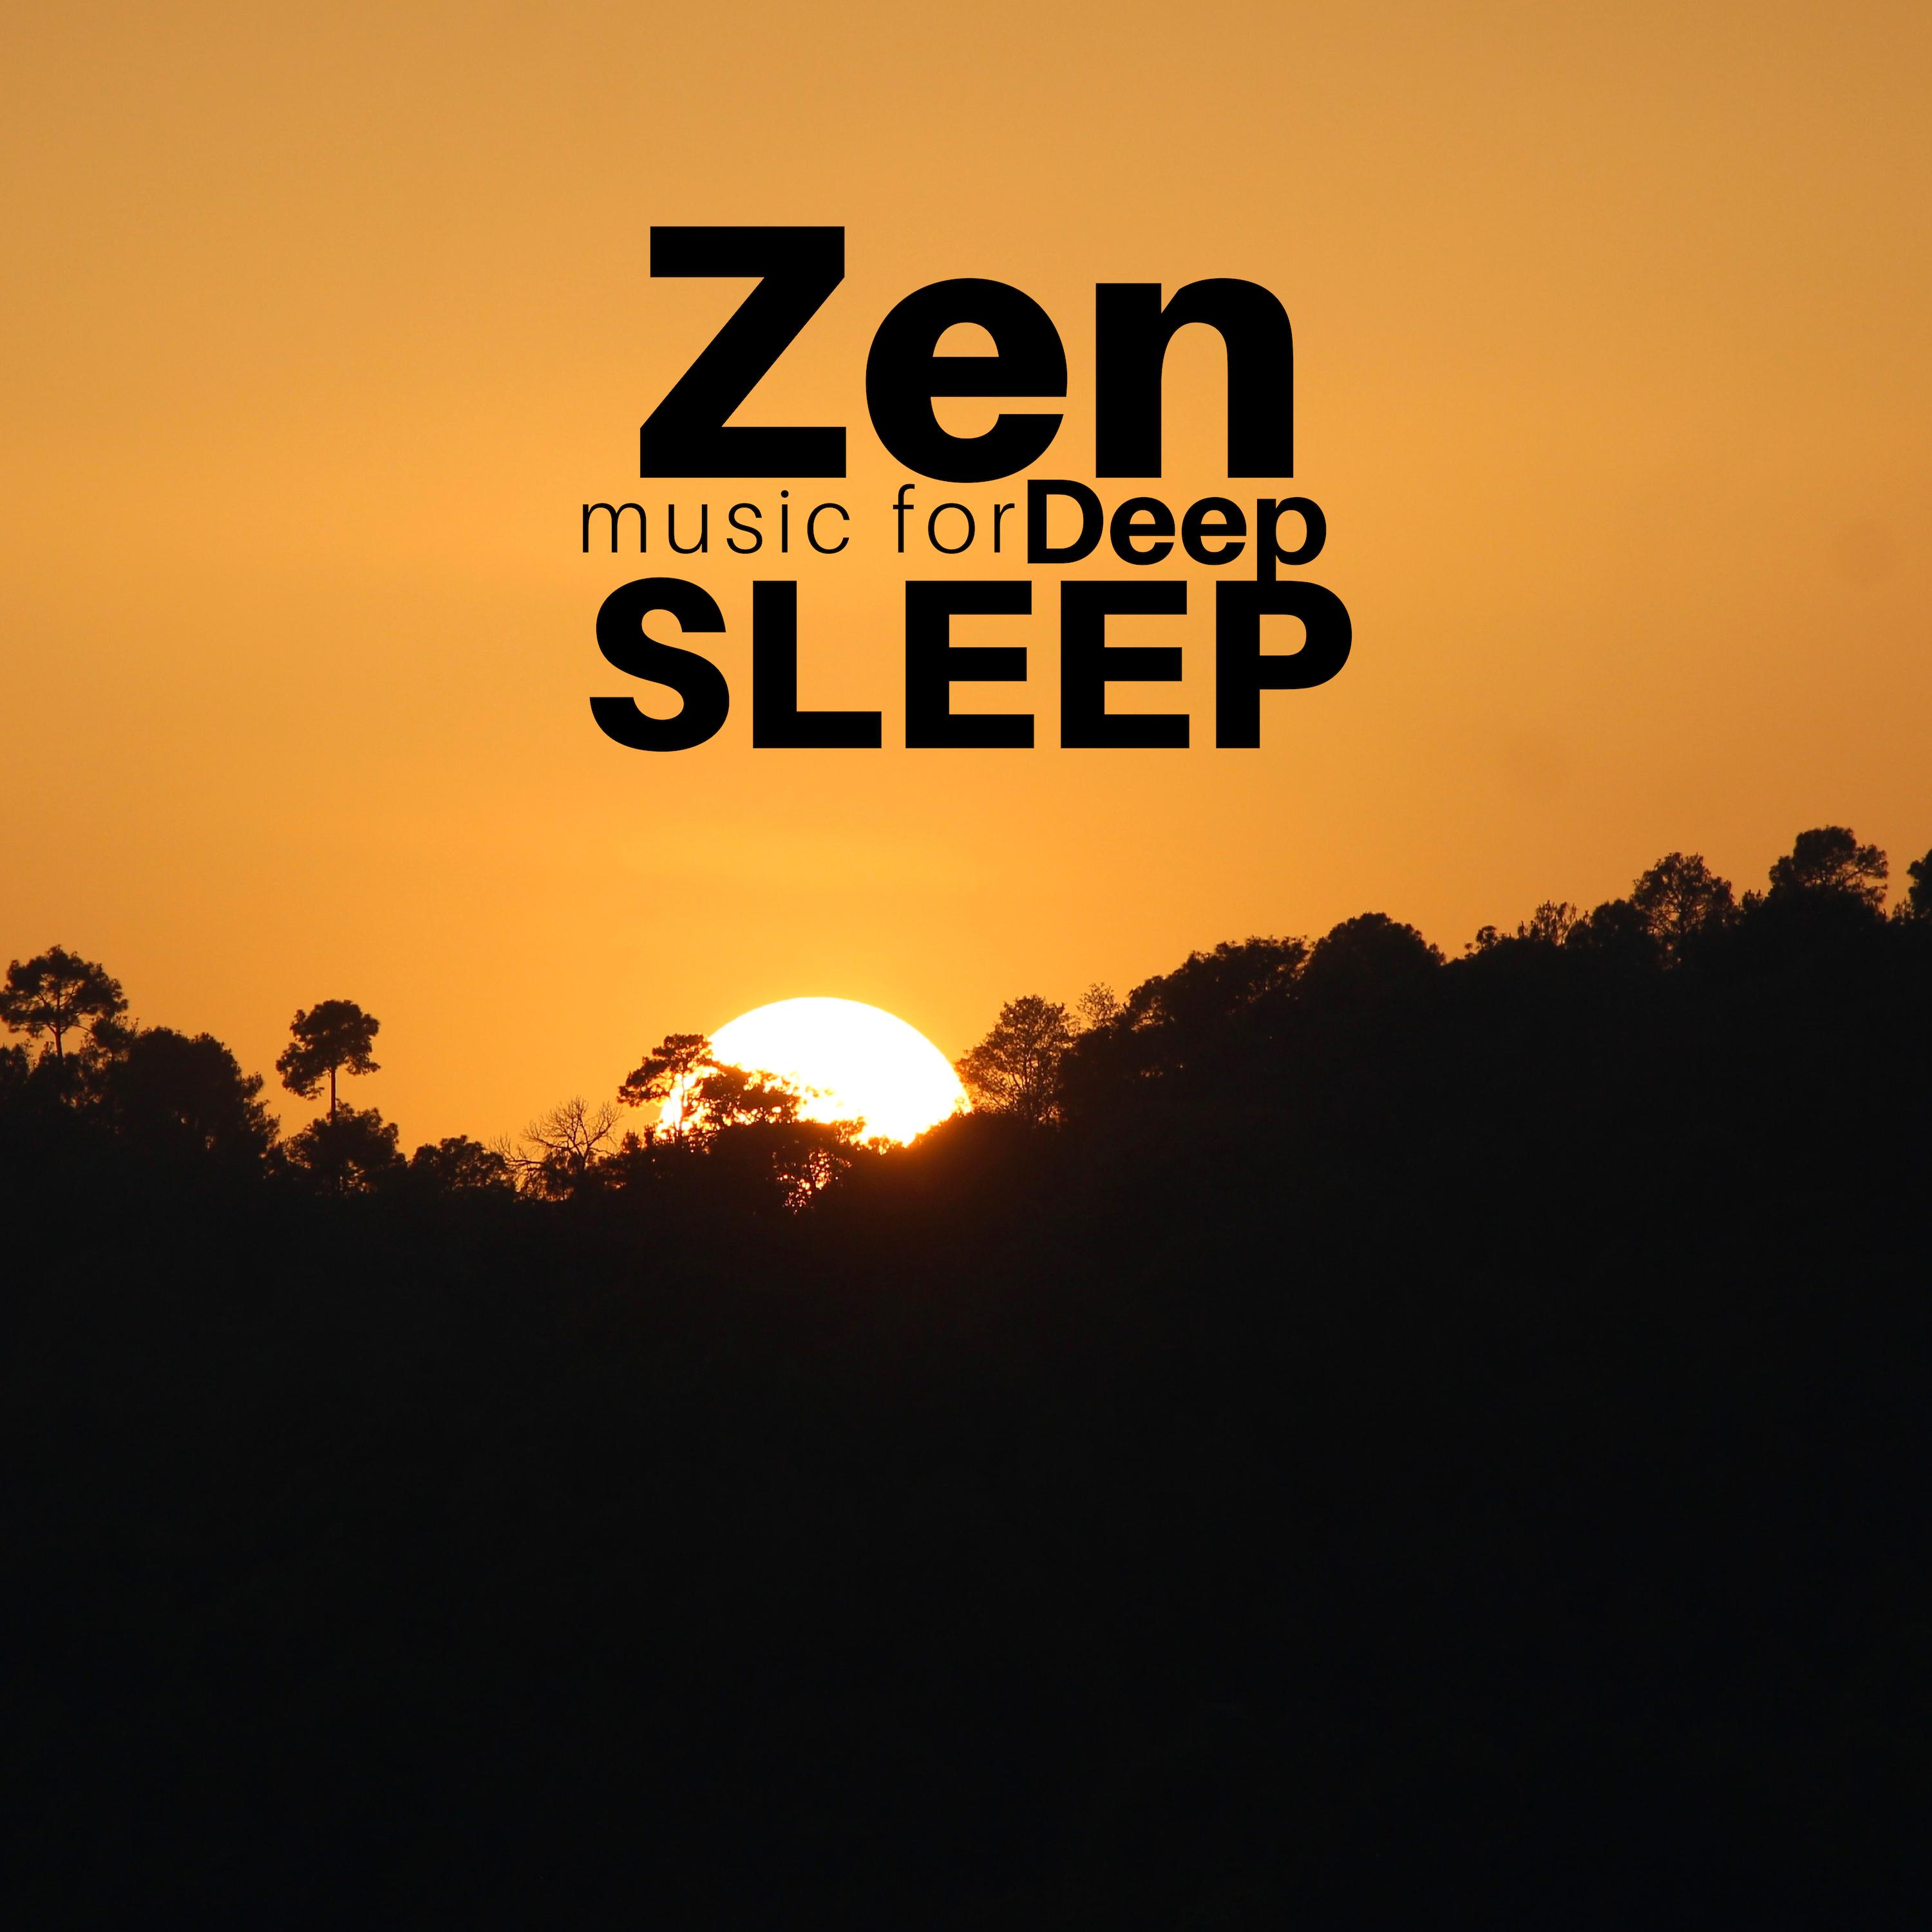 Zen Music for Deep Sleep - Prime Music CD for Sleeping Deeply All Night